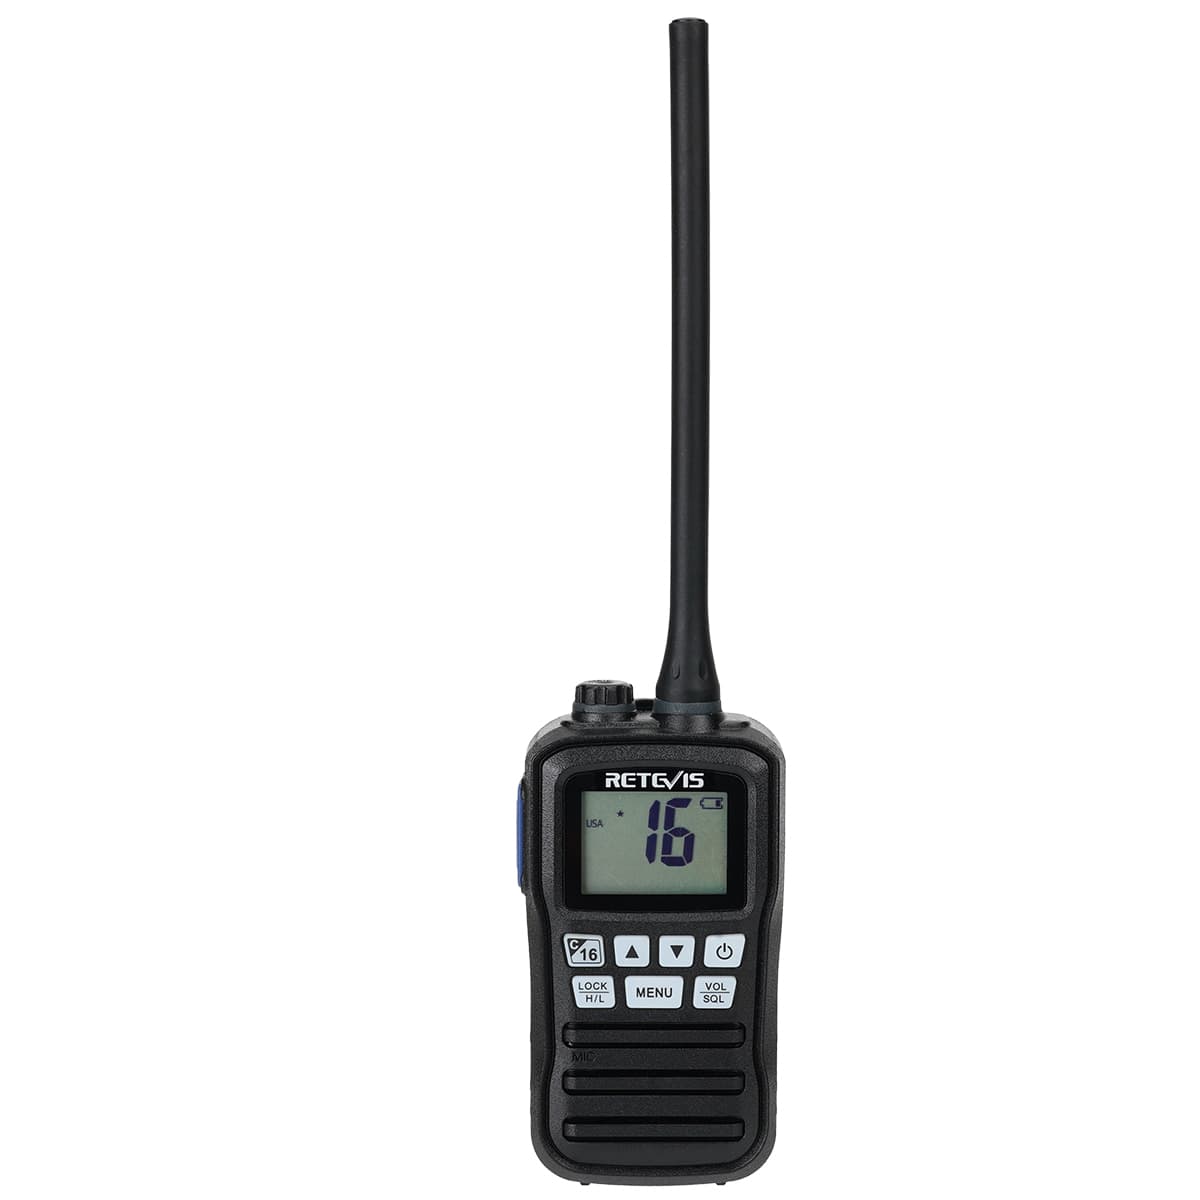 RM01 marine radio